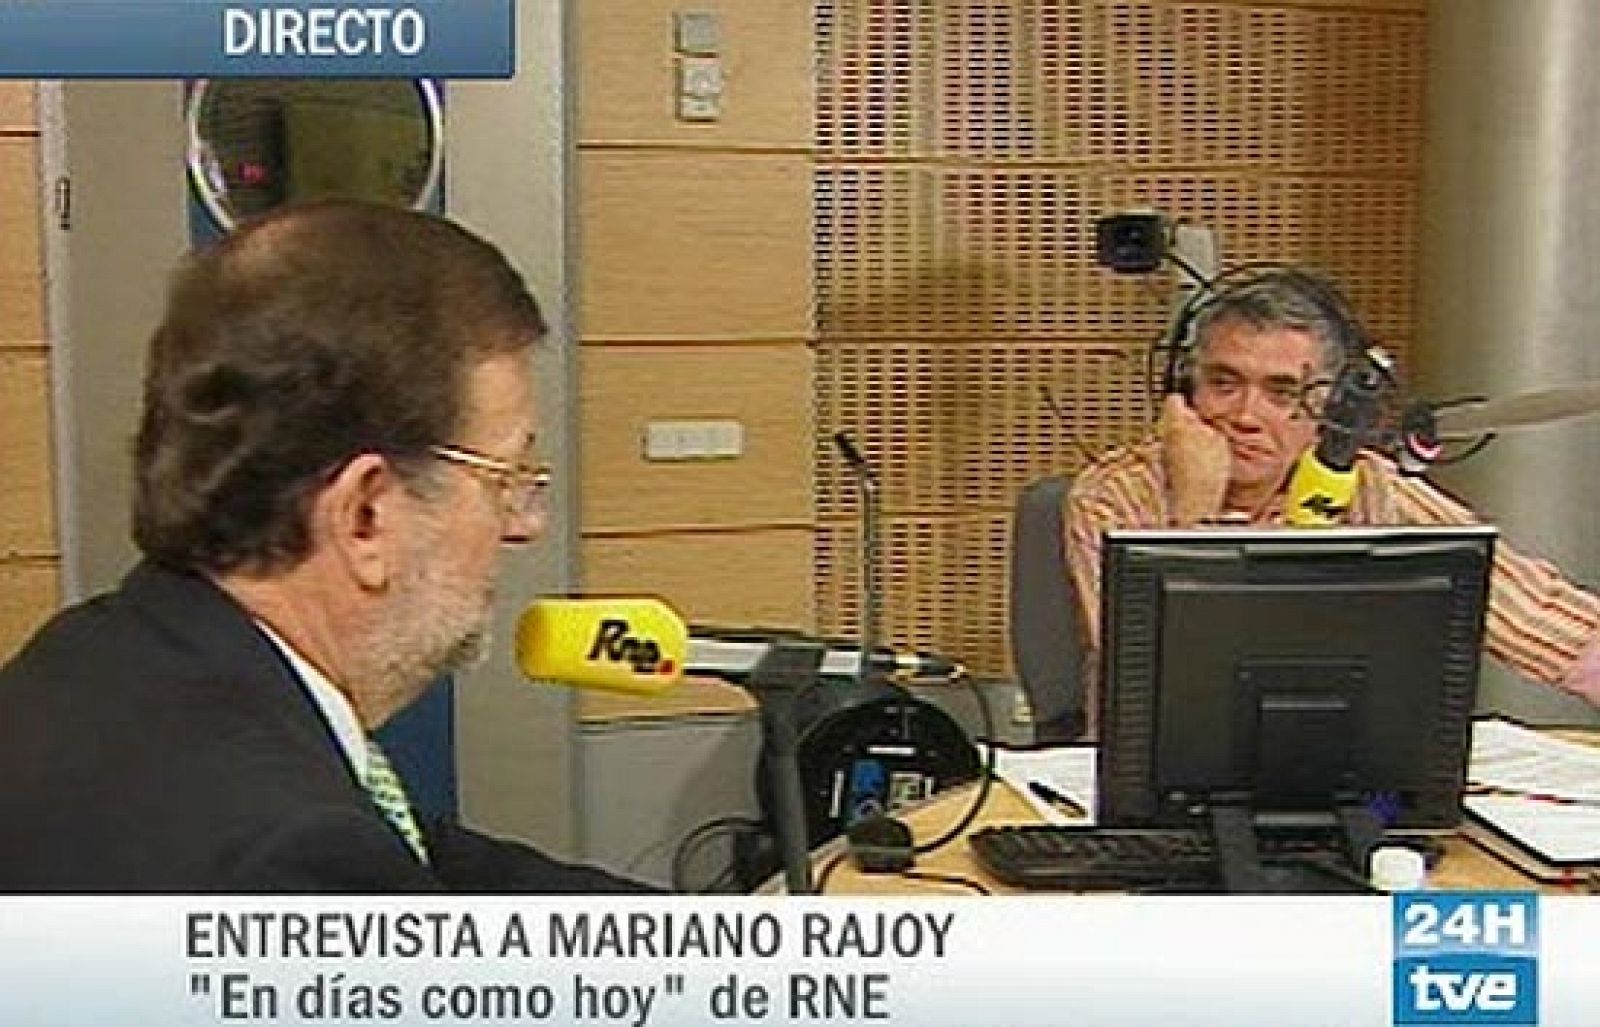 Rajoy: "¡Yo trabajo la tira!"